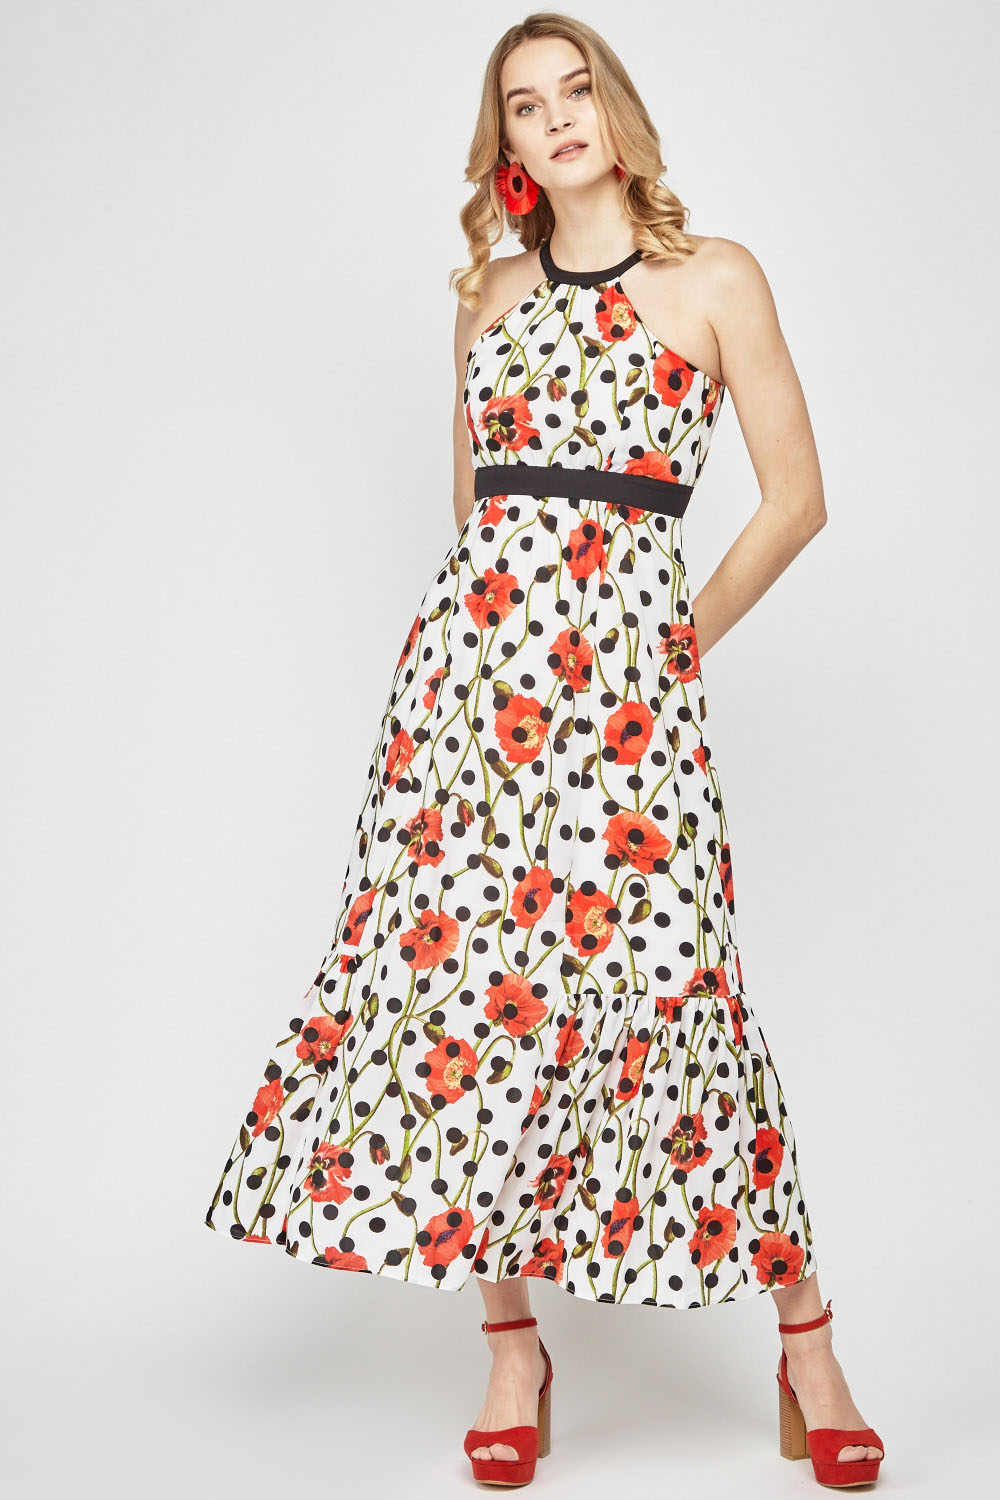 Poppy Flower Print Maxi Dress - Just $6